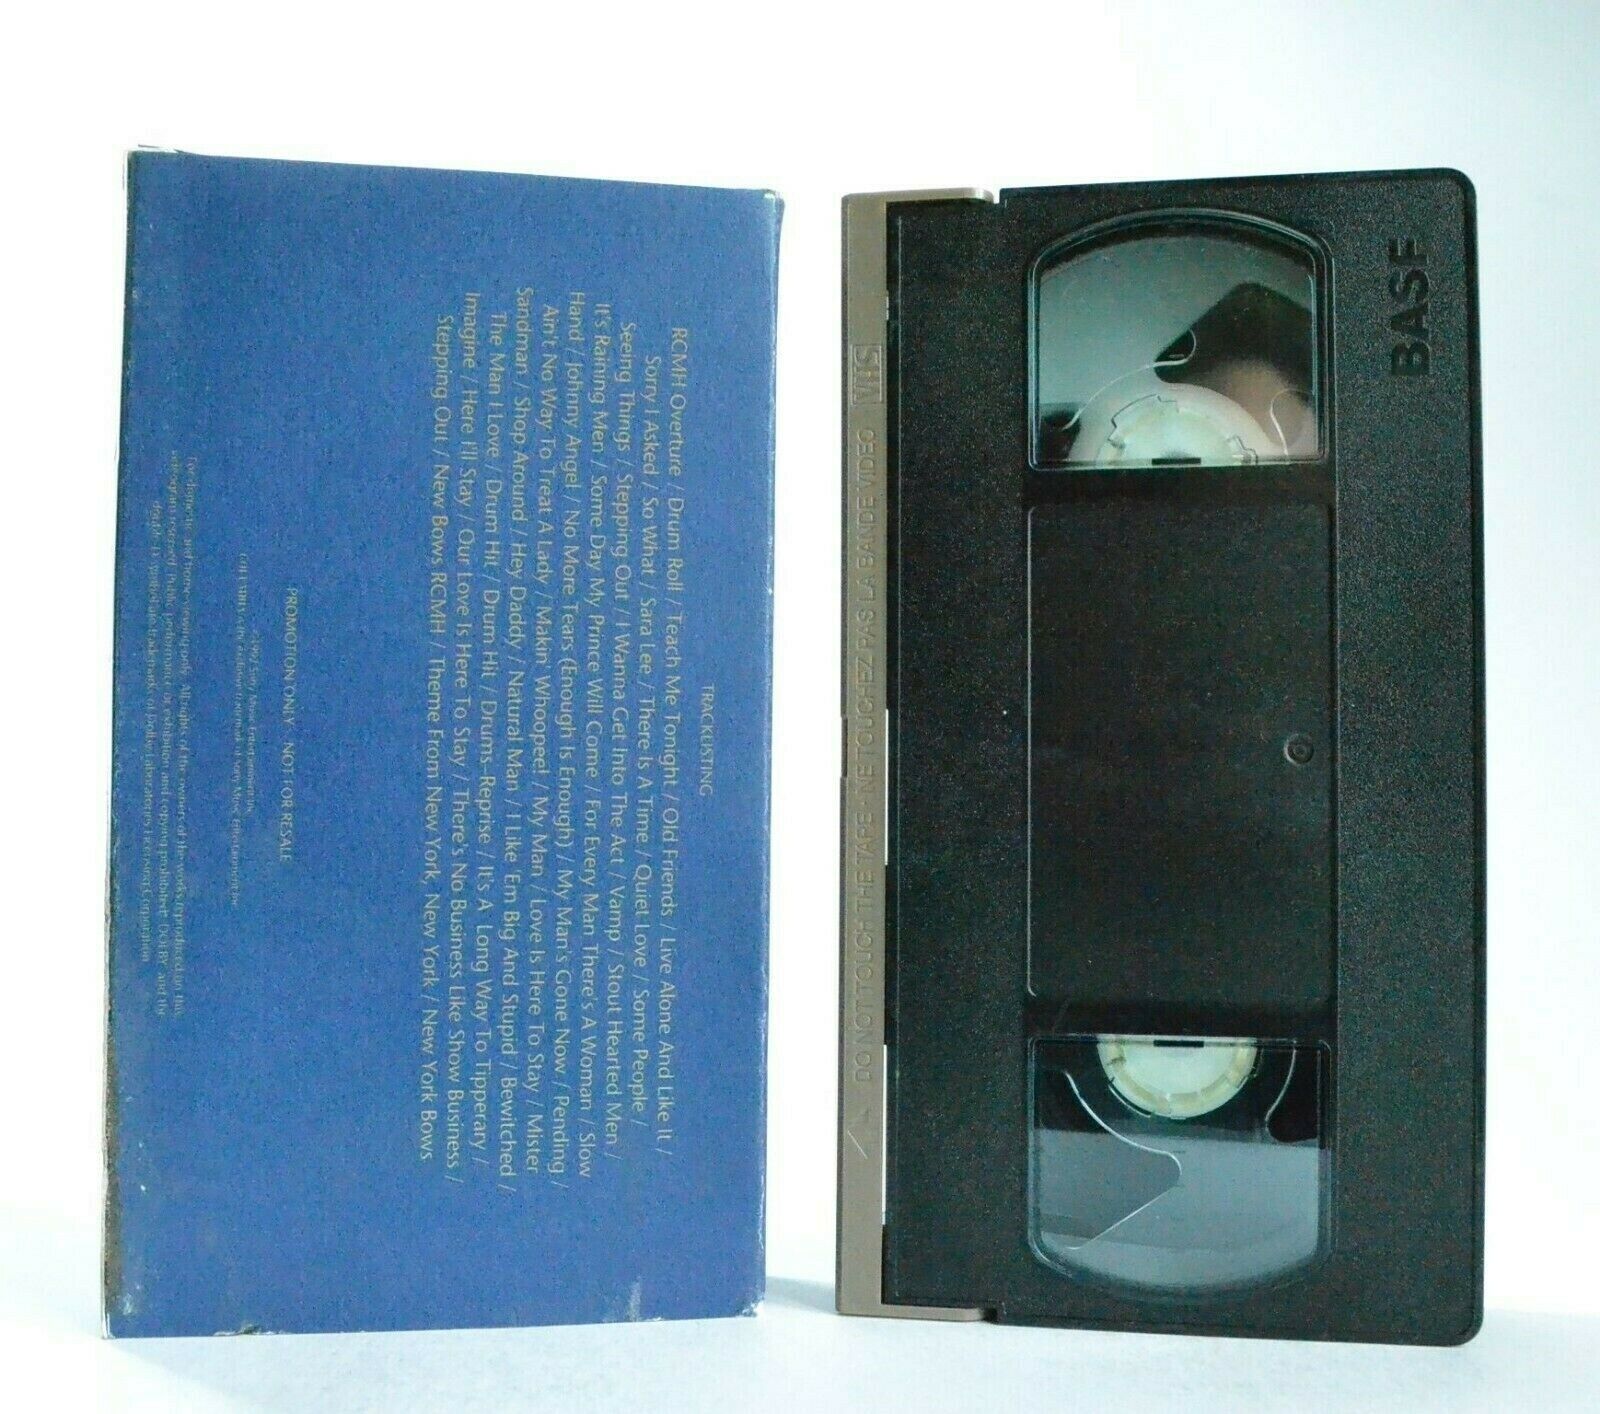 Liza Minnelli: Radio City Music Hall (10/11/1992) - New York - Carton Box - VHS-